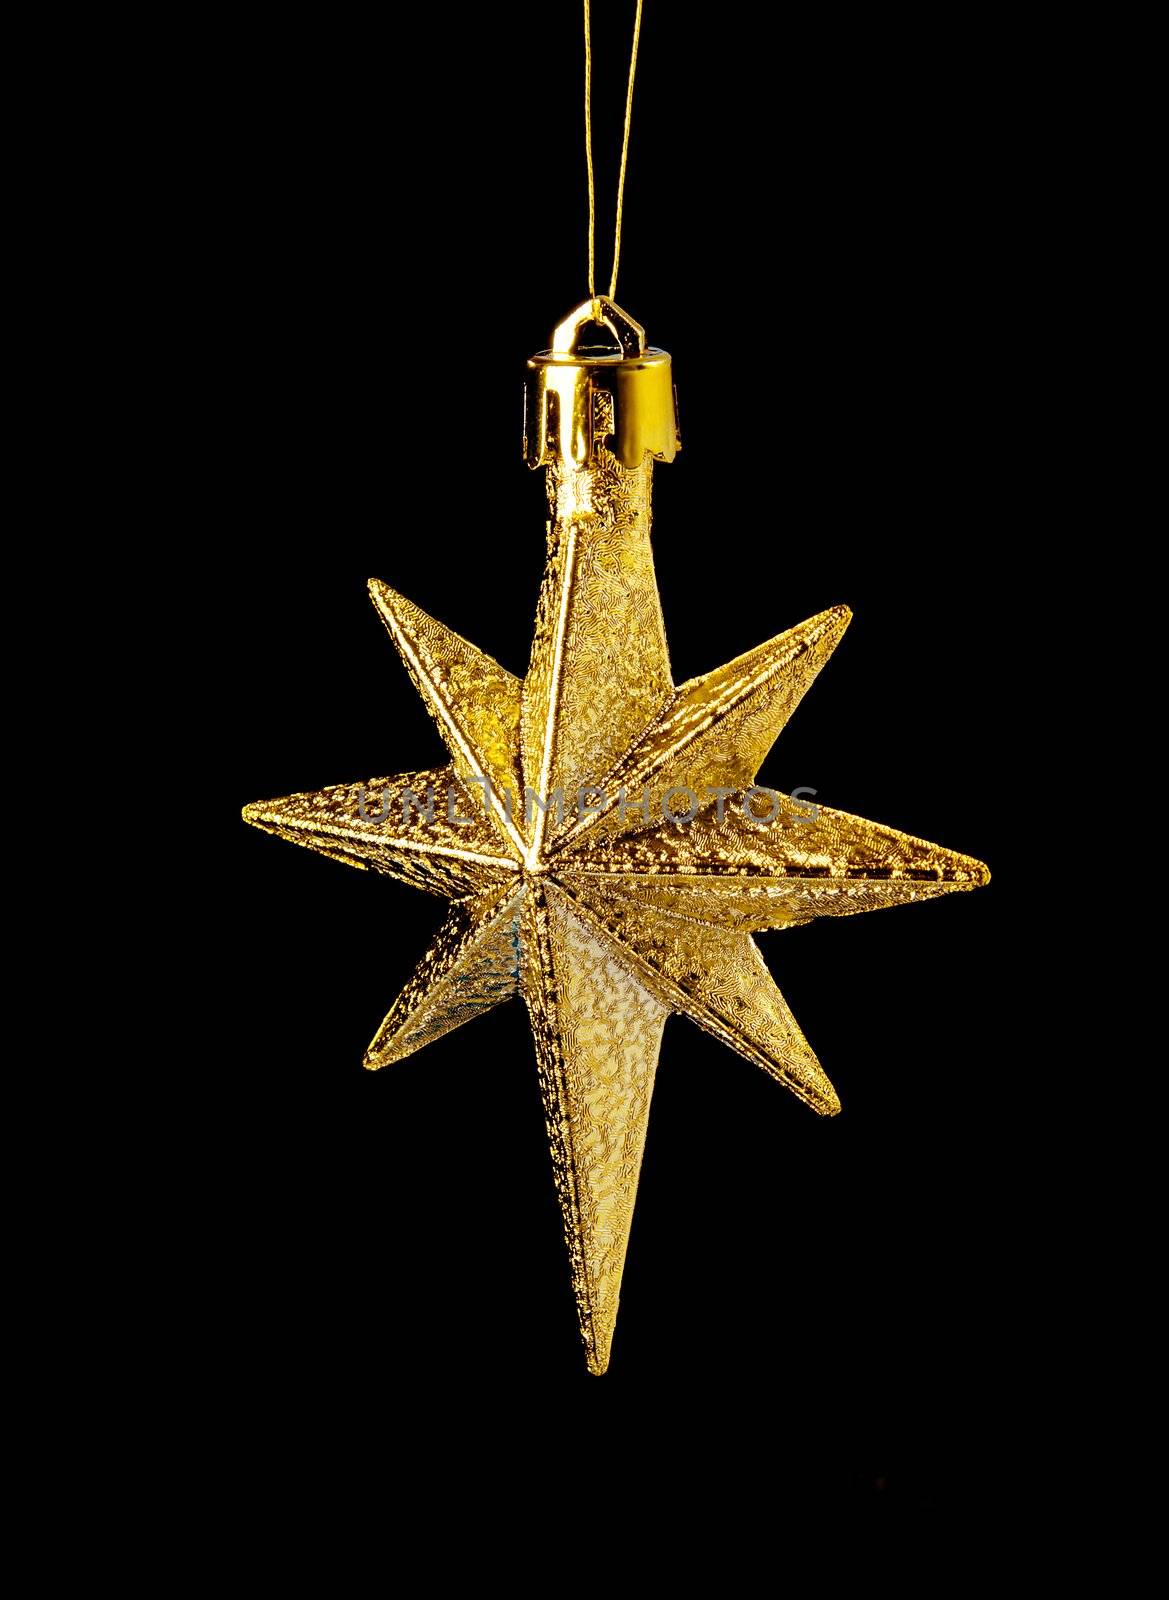 gold(en) star on black background,,christmas ornament